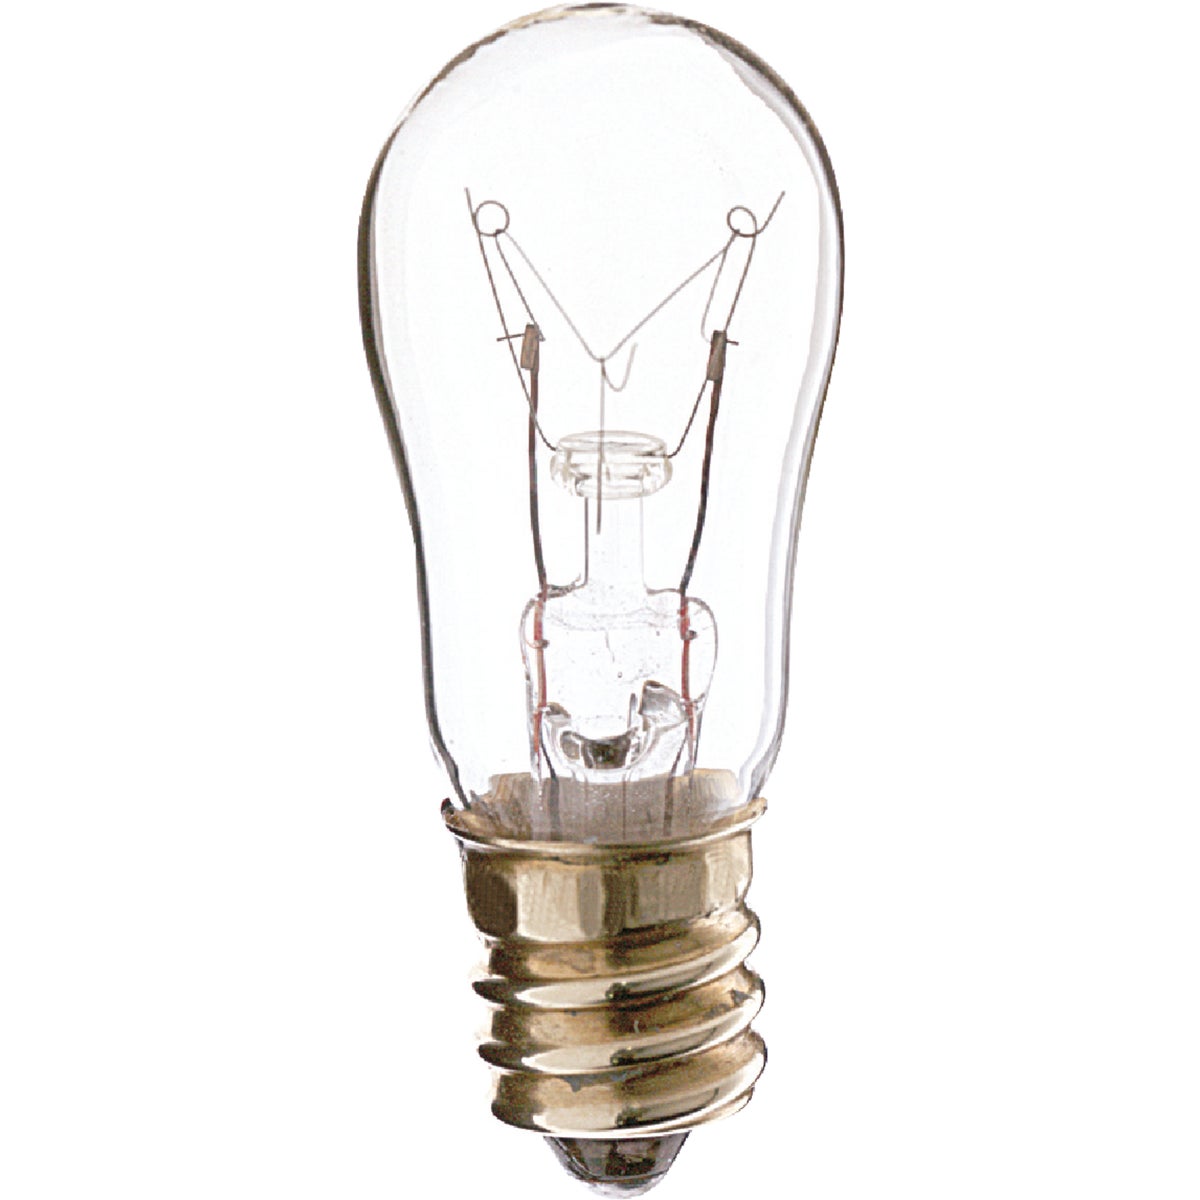 Item 532037, S6 incandescent indicator light bulb with candelabra base.